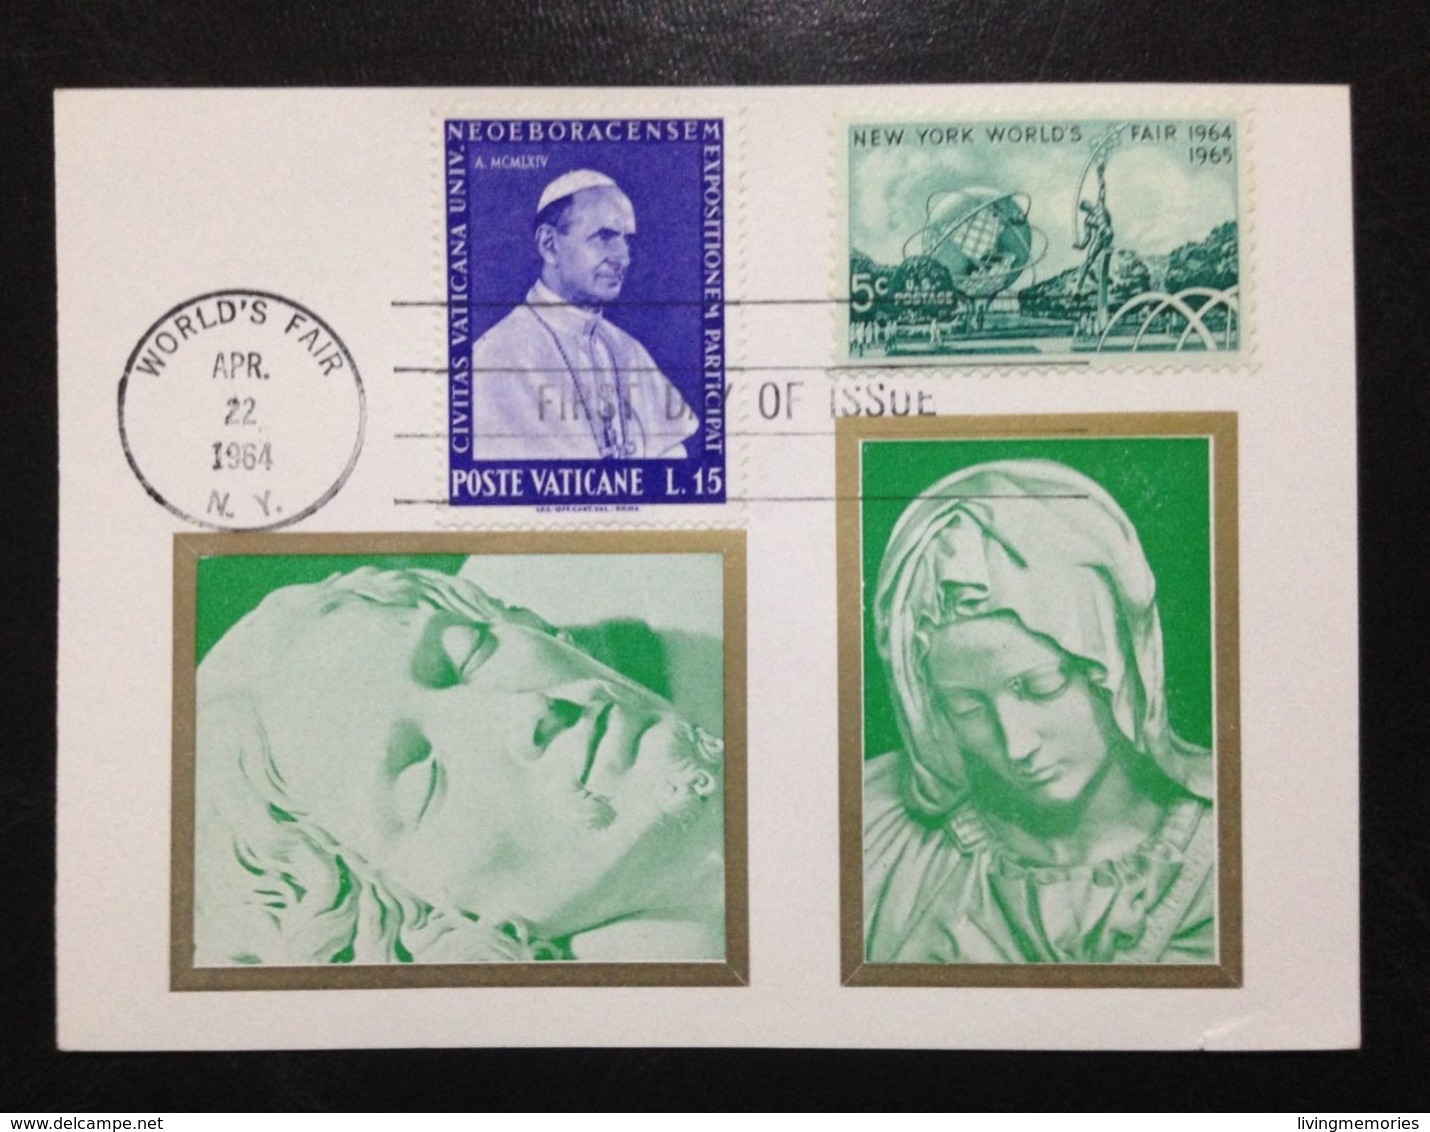 United States, Souvenir Sheet, WORLD'S FAIR NEW YORK, POPE PAUL VI, 1964 - Feuilles Complètes